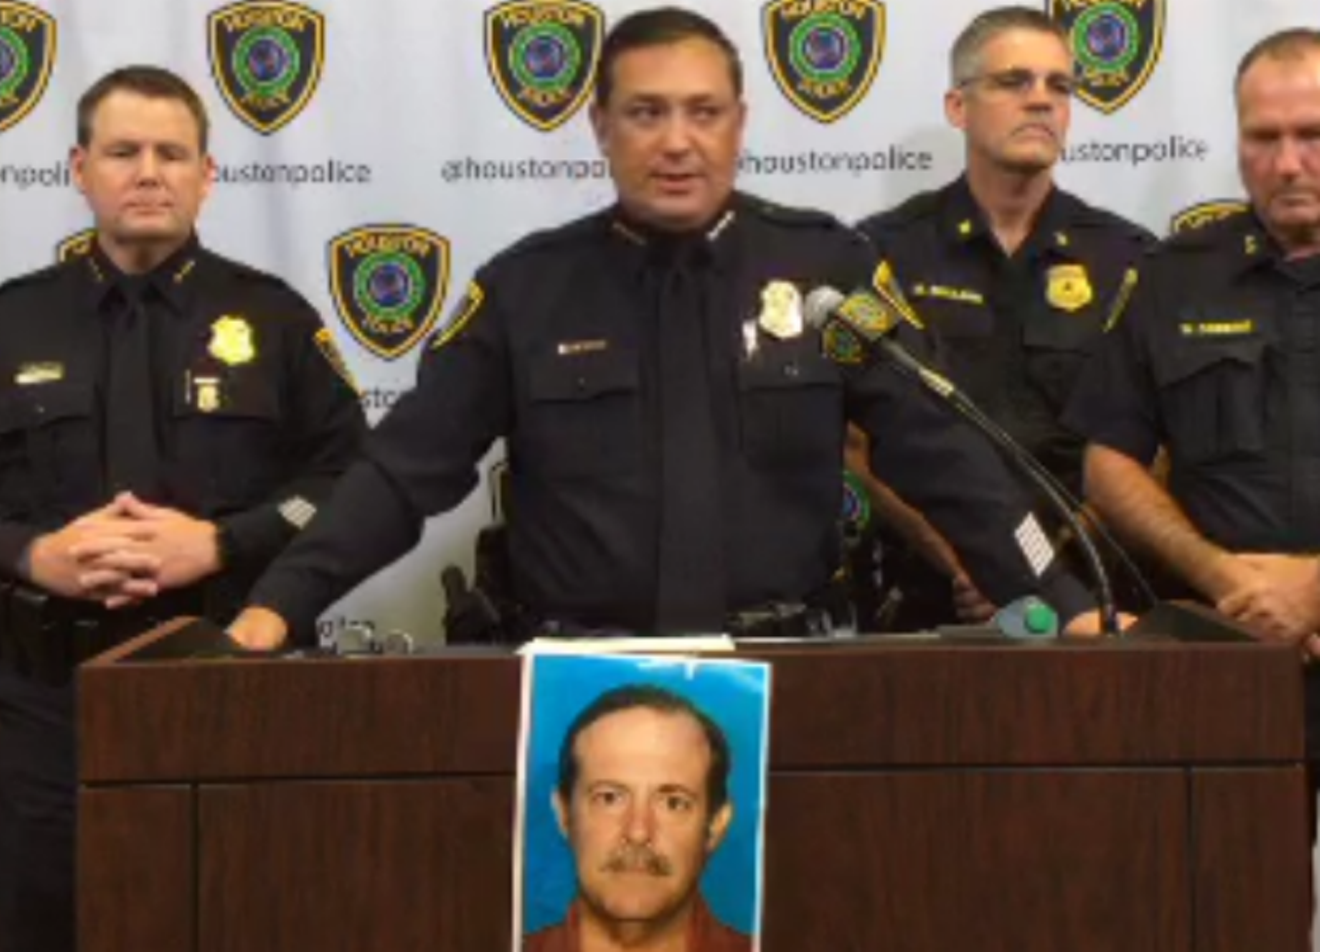 Chief Art Acevedo, center, standing above a photo of suspect in the case, Joseph James Pappas.